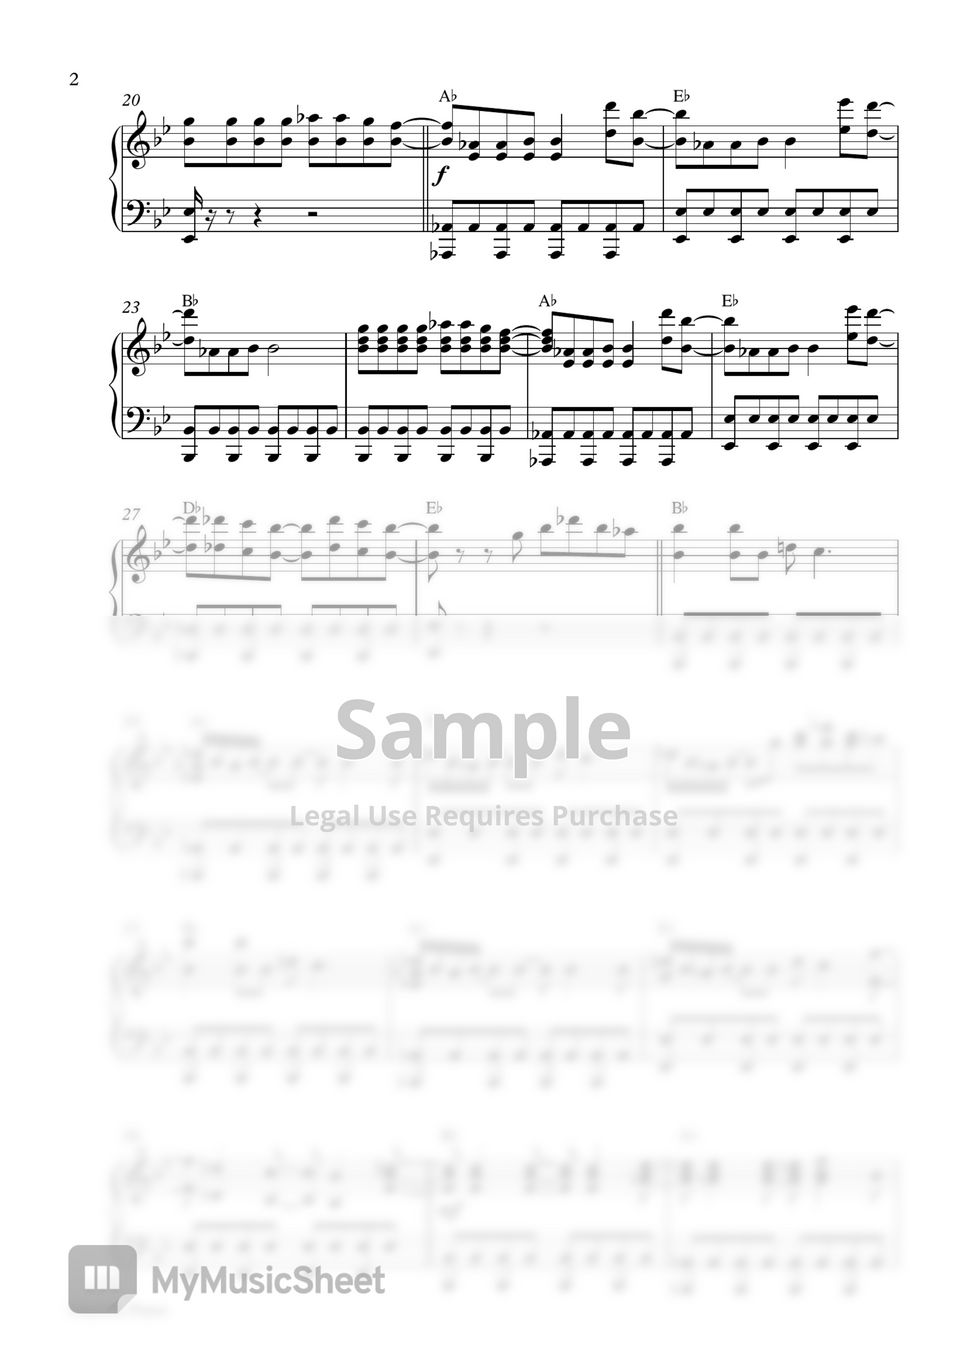 Lady Gaga - Stupid Love (Piano Sheet) by Pianella Piano